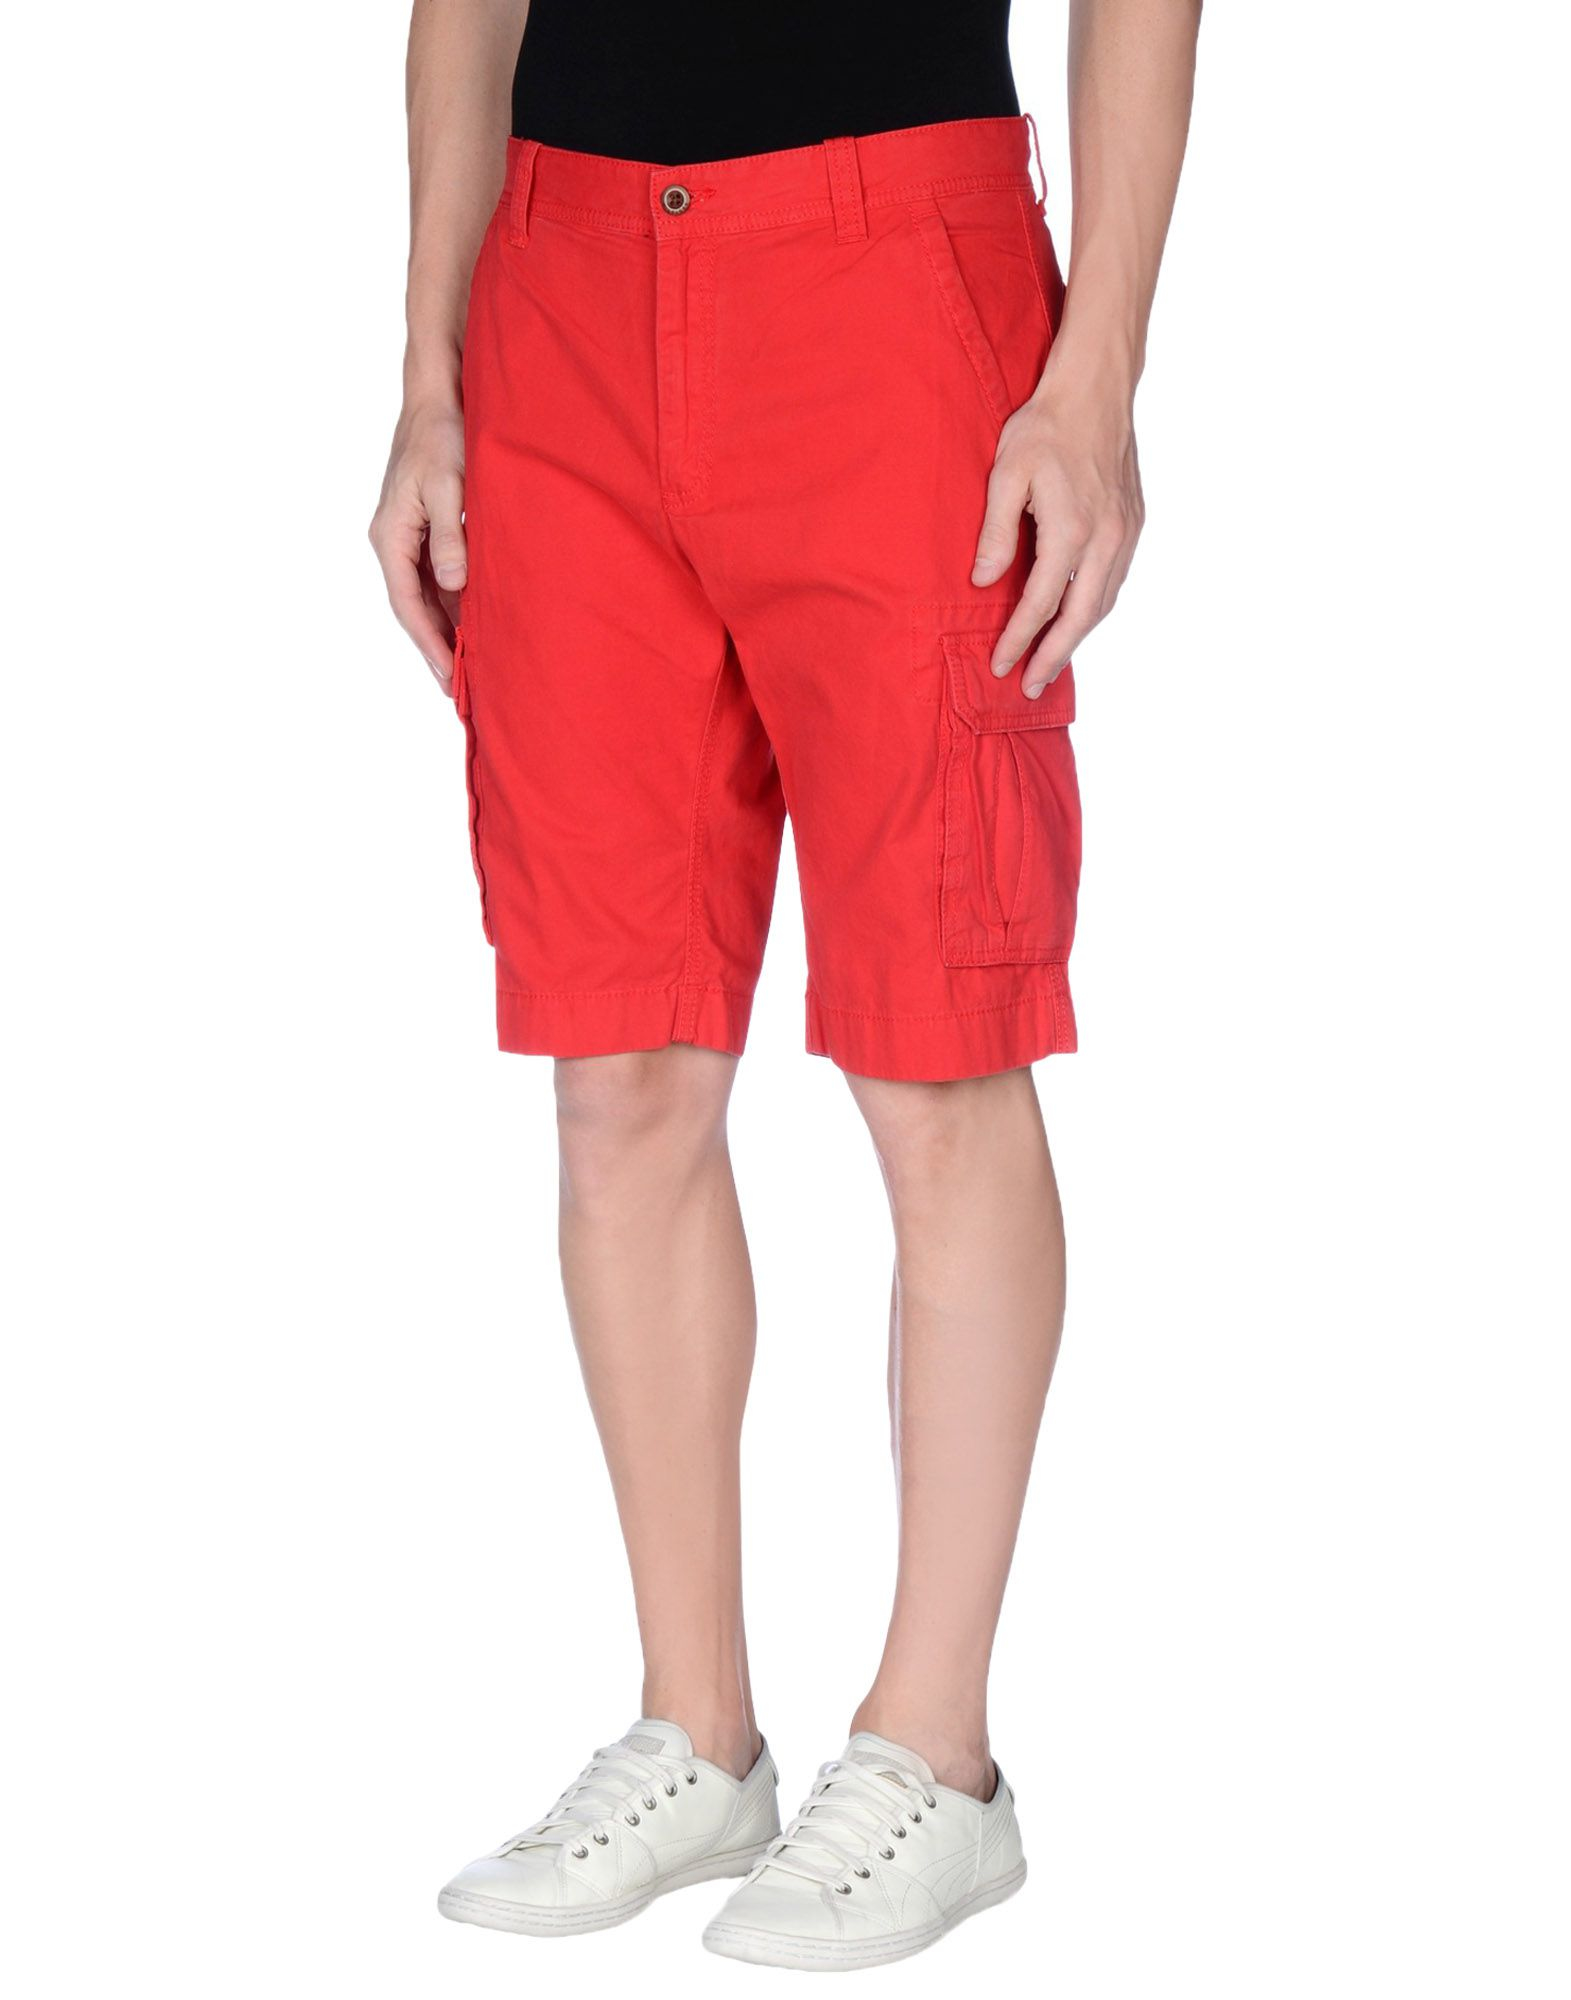 Tommy hilfiger Bermuda Shorts in Red for Men